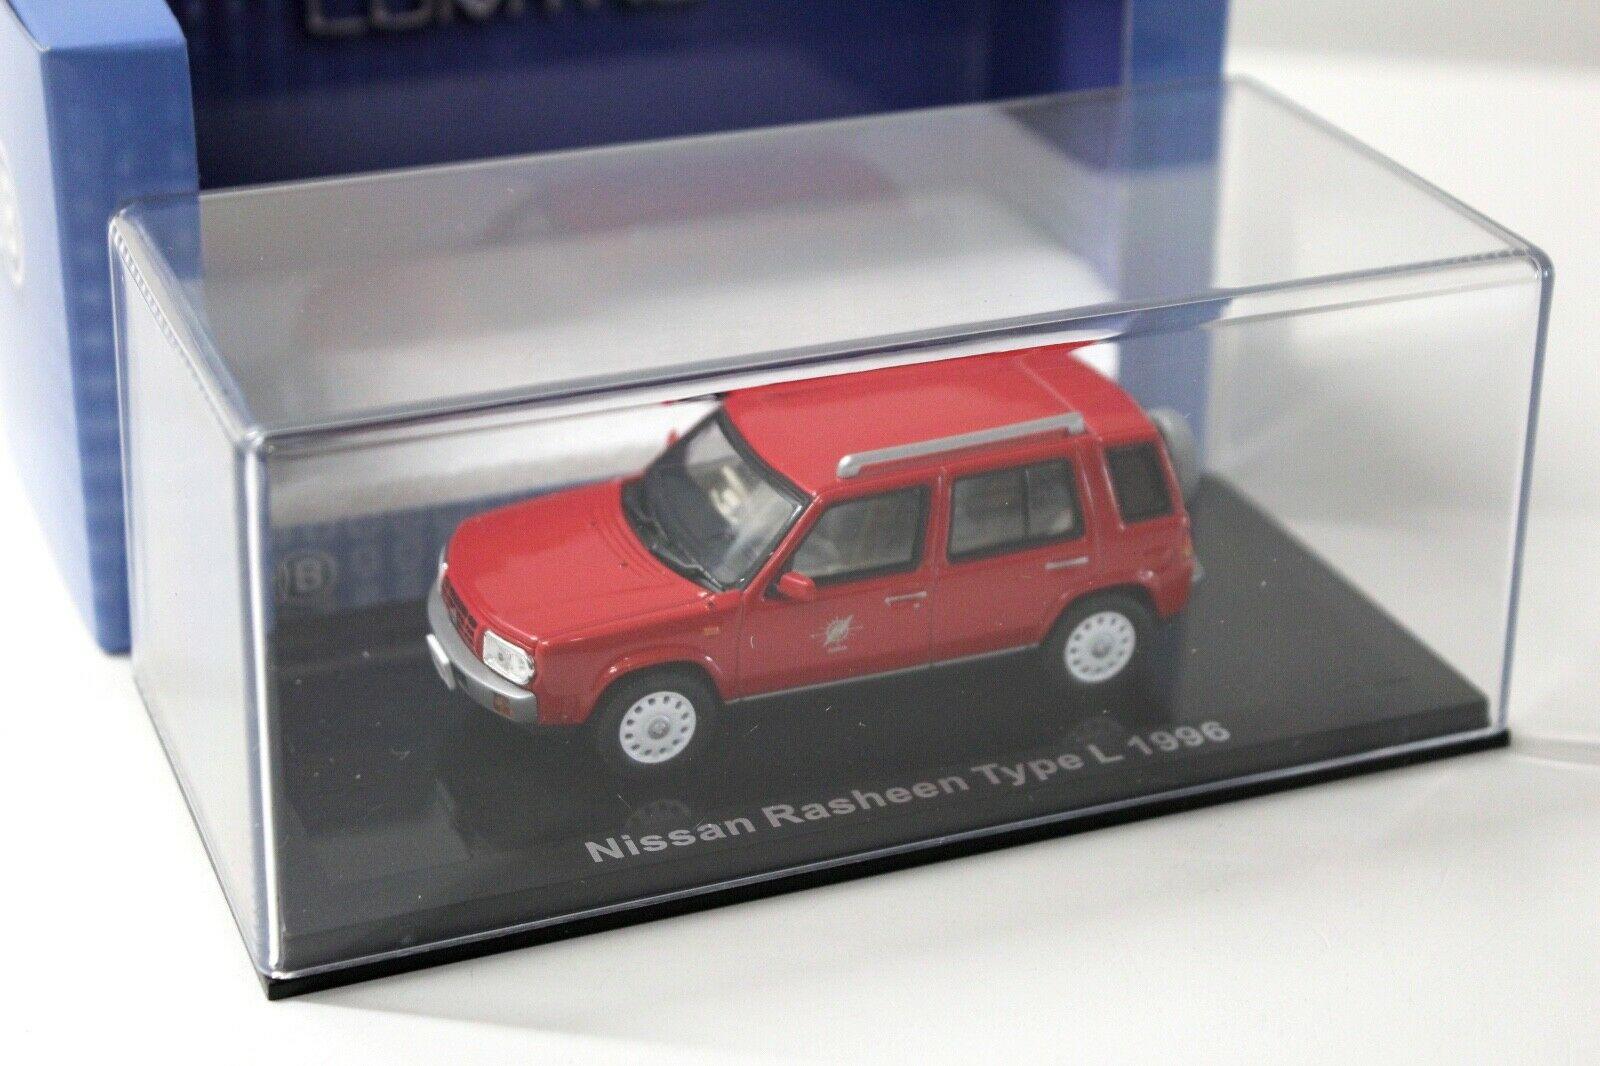 1:43 Norev Nissan Rasheen Type L 1996 red 